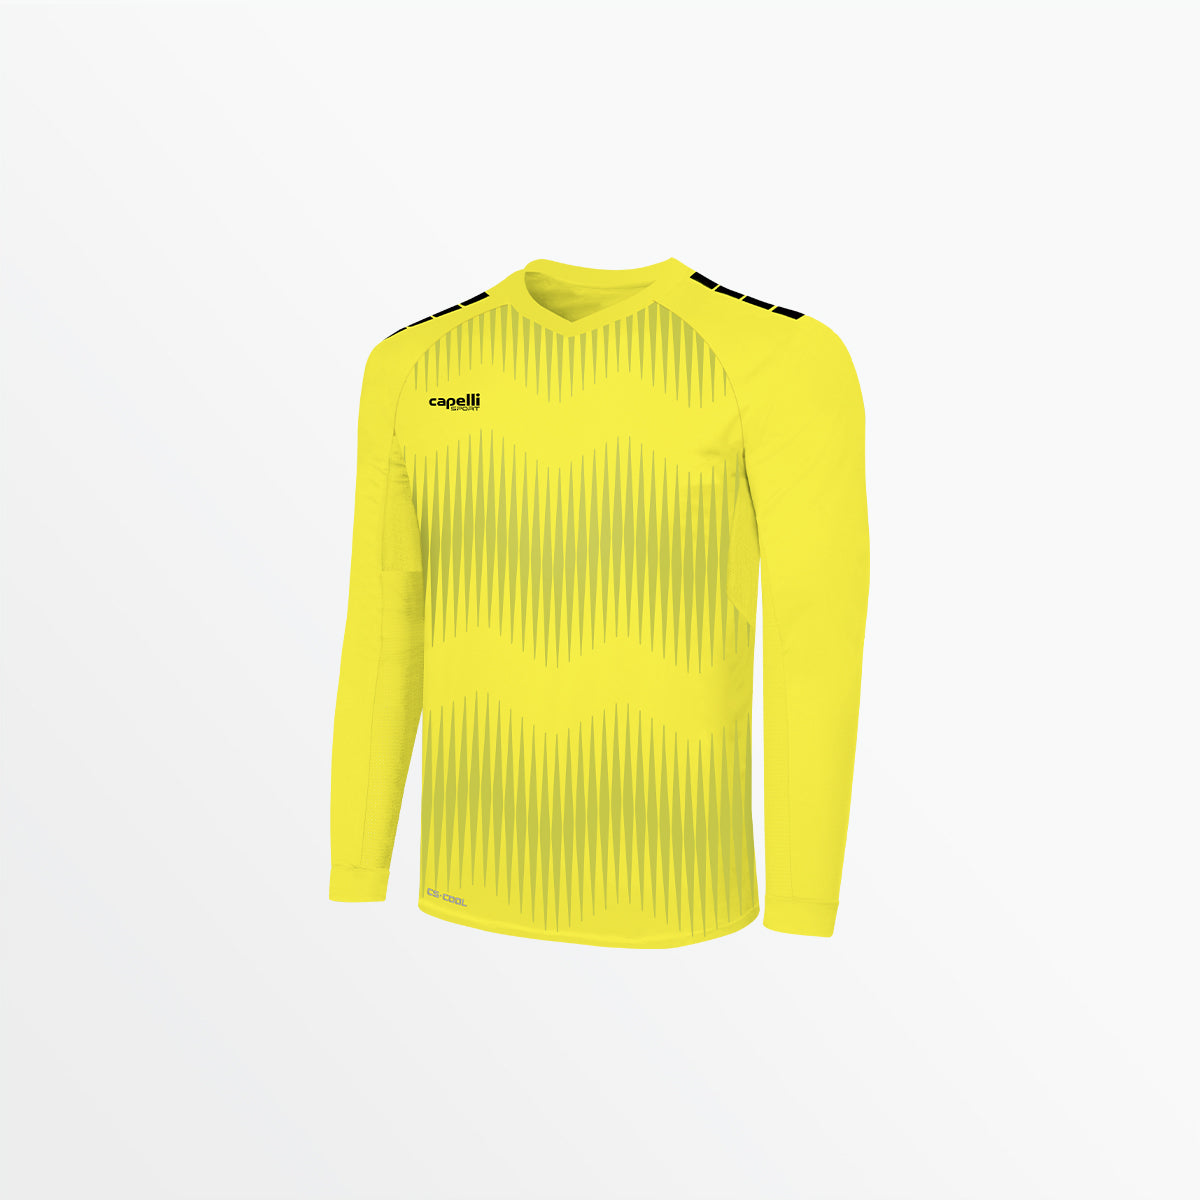 Nike Gardien IV Long Sleeve Goalkeeper Jersey in Dark Grey - Size M